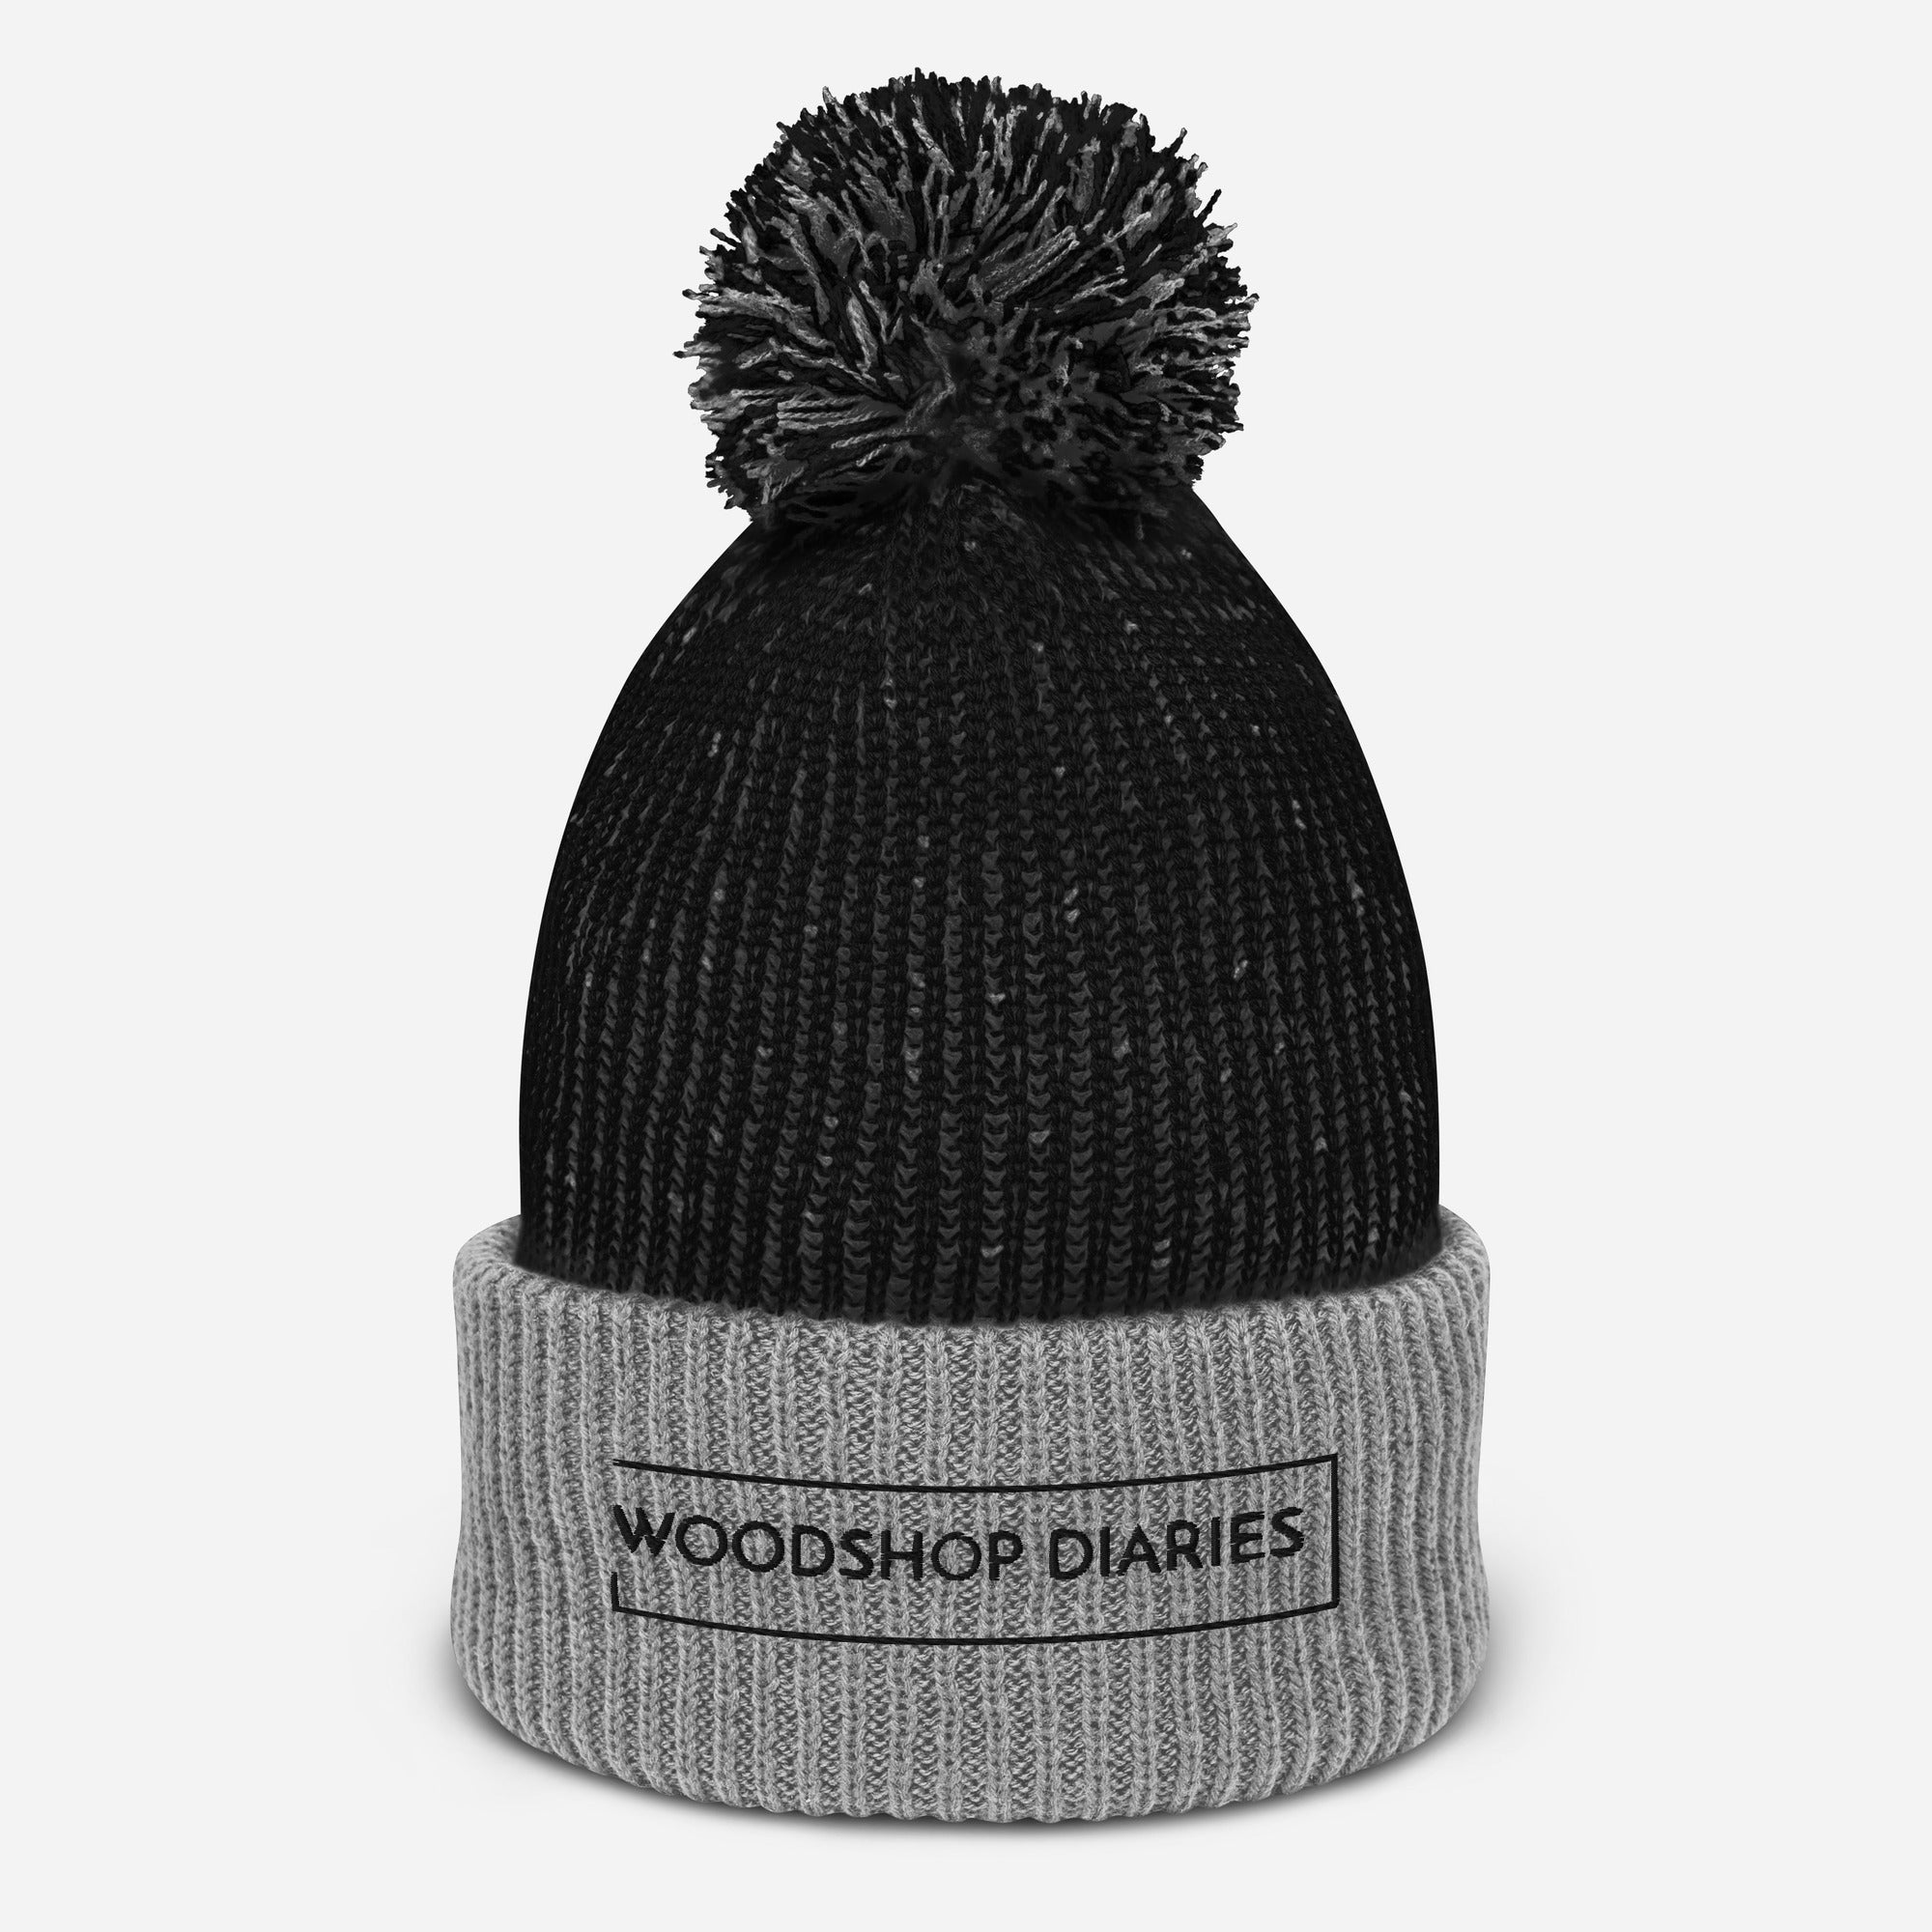 Woodshop Diaries Embroidered Logo Beanie